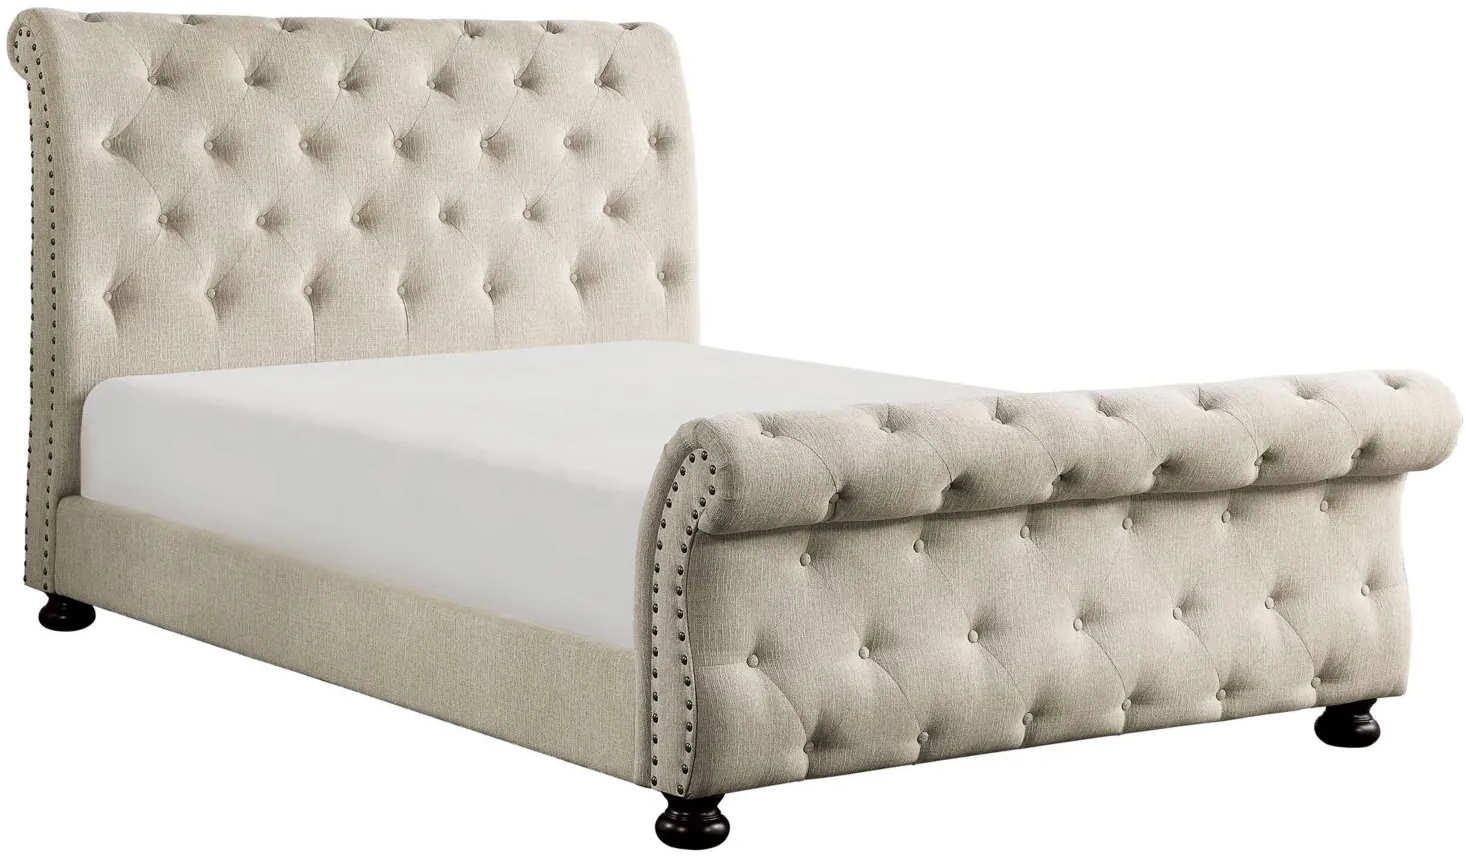 Sanders Upholstered Bed in Beige by Homelegance